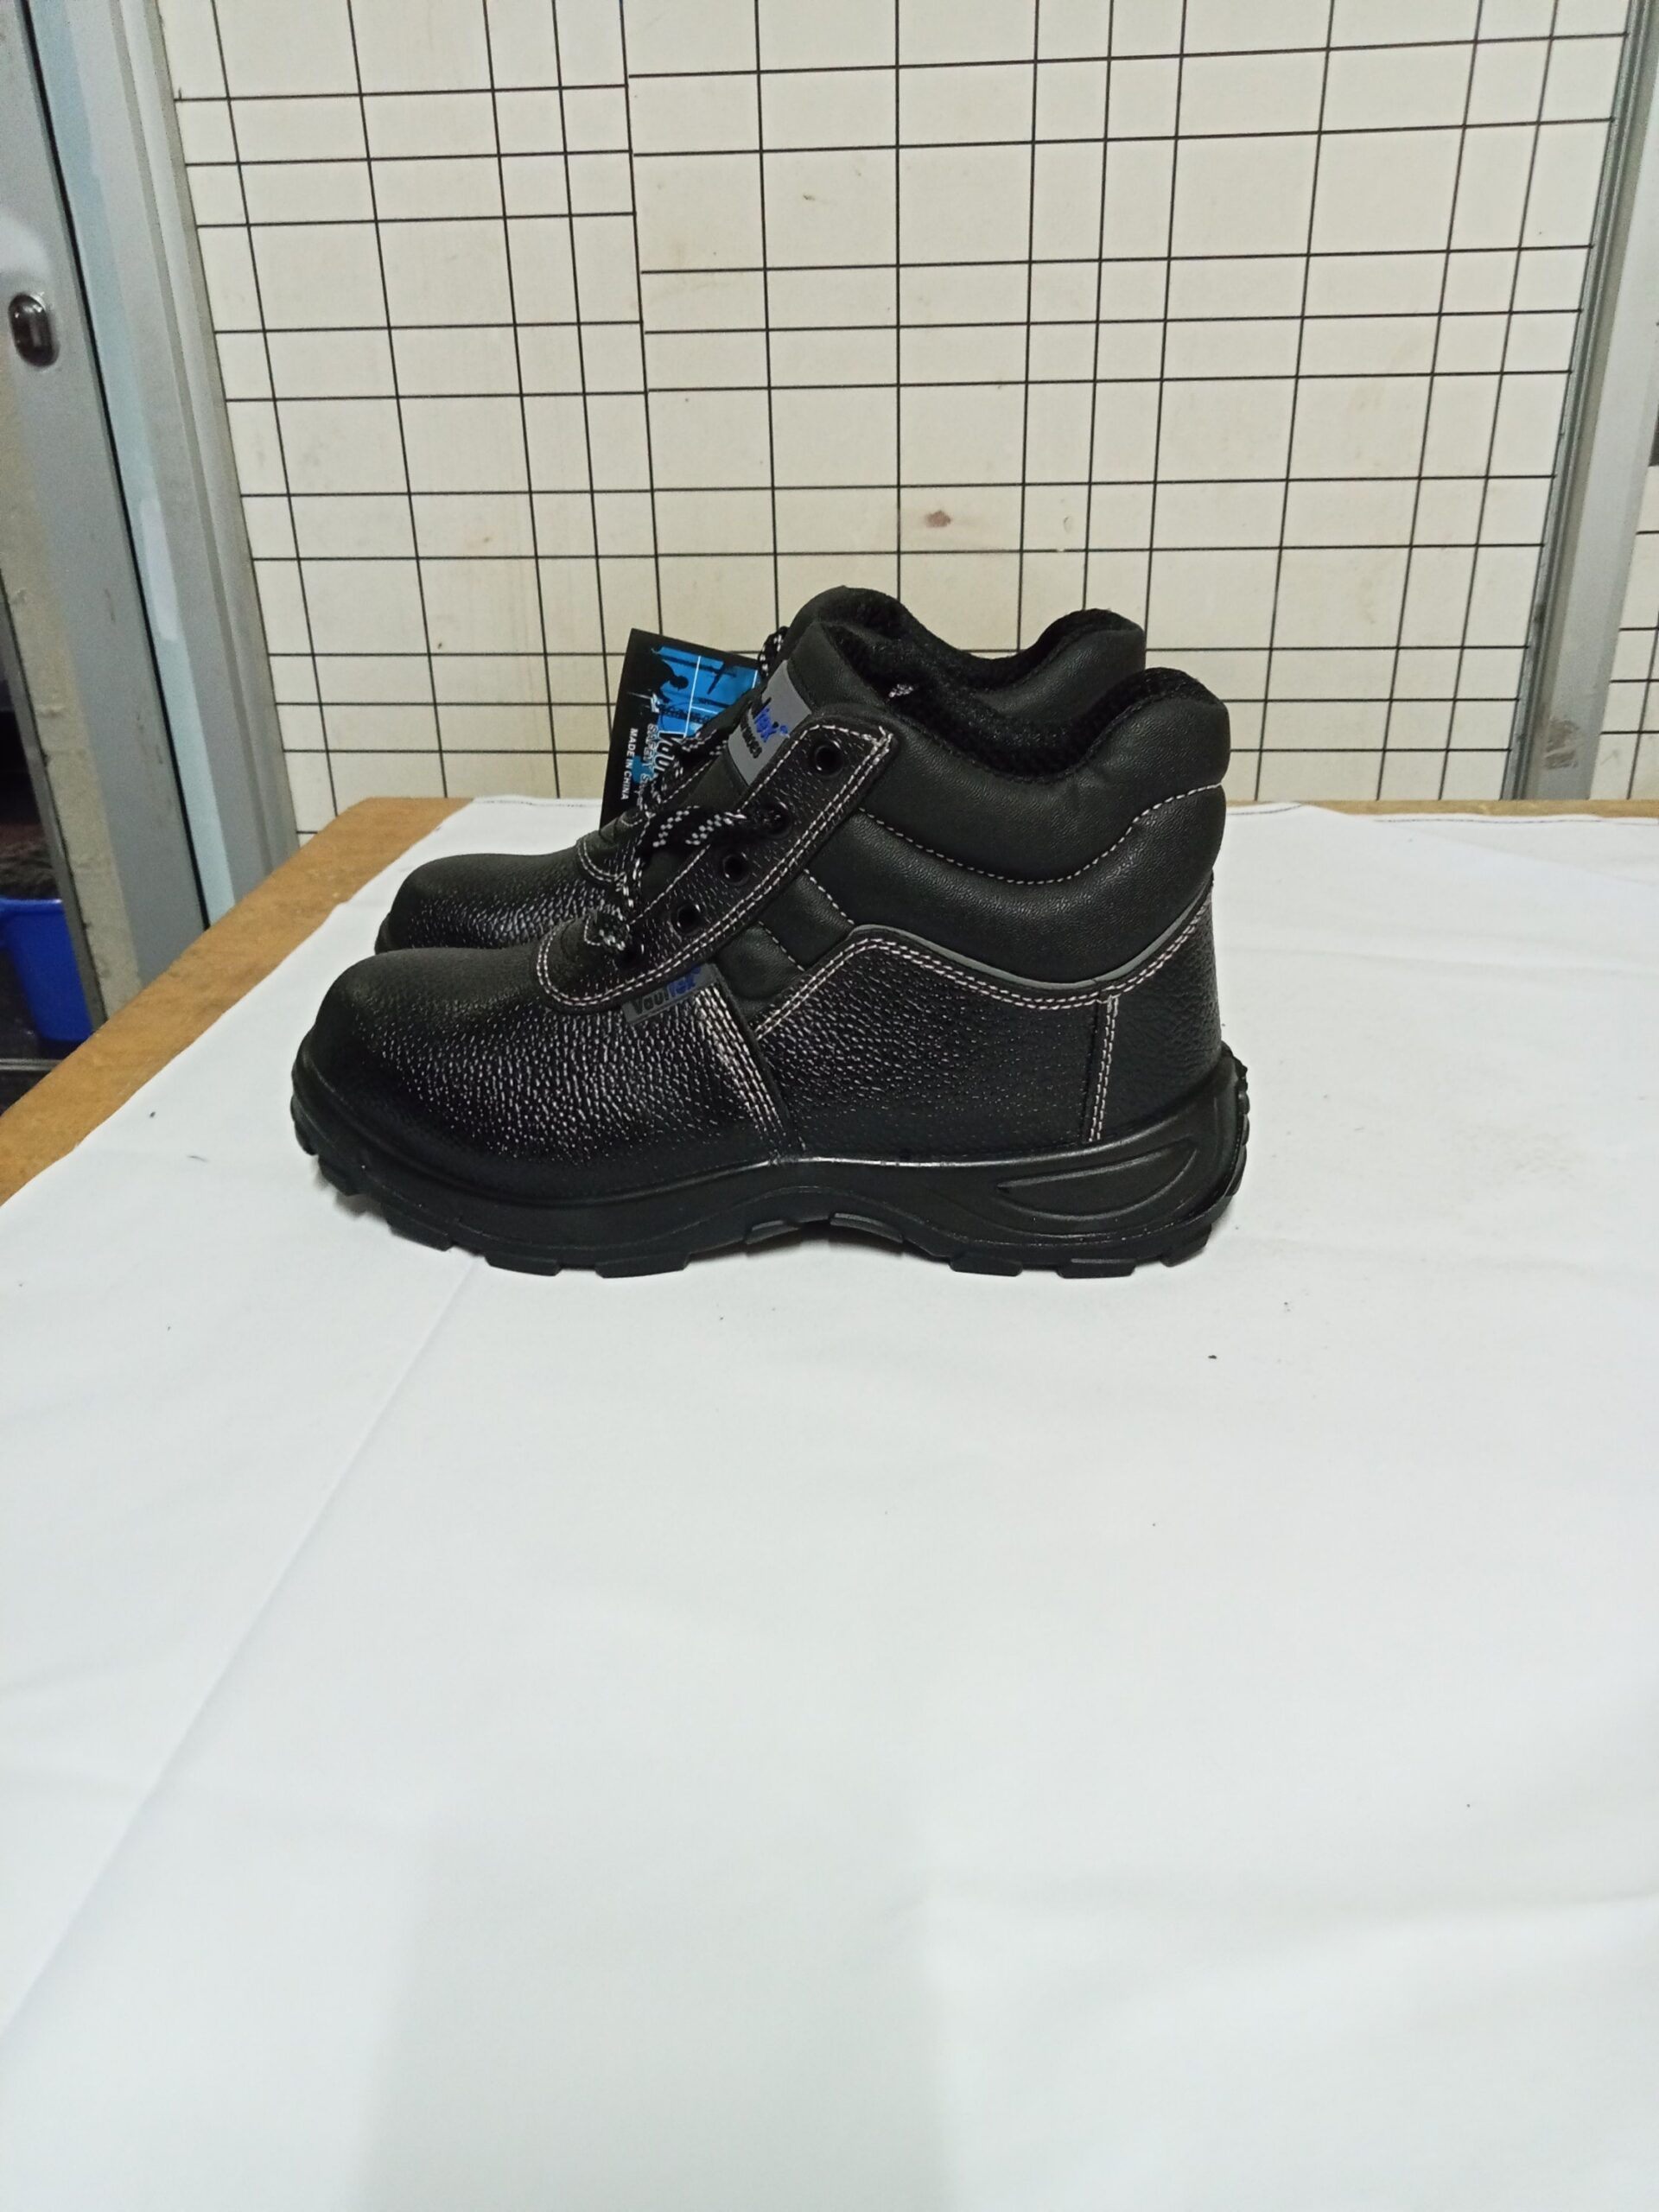 safety boots - Safety Store Kenya